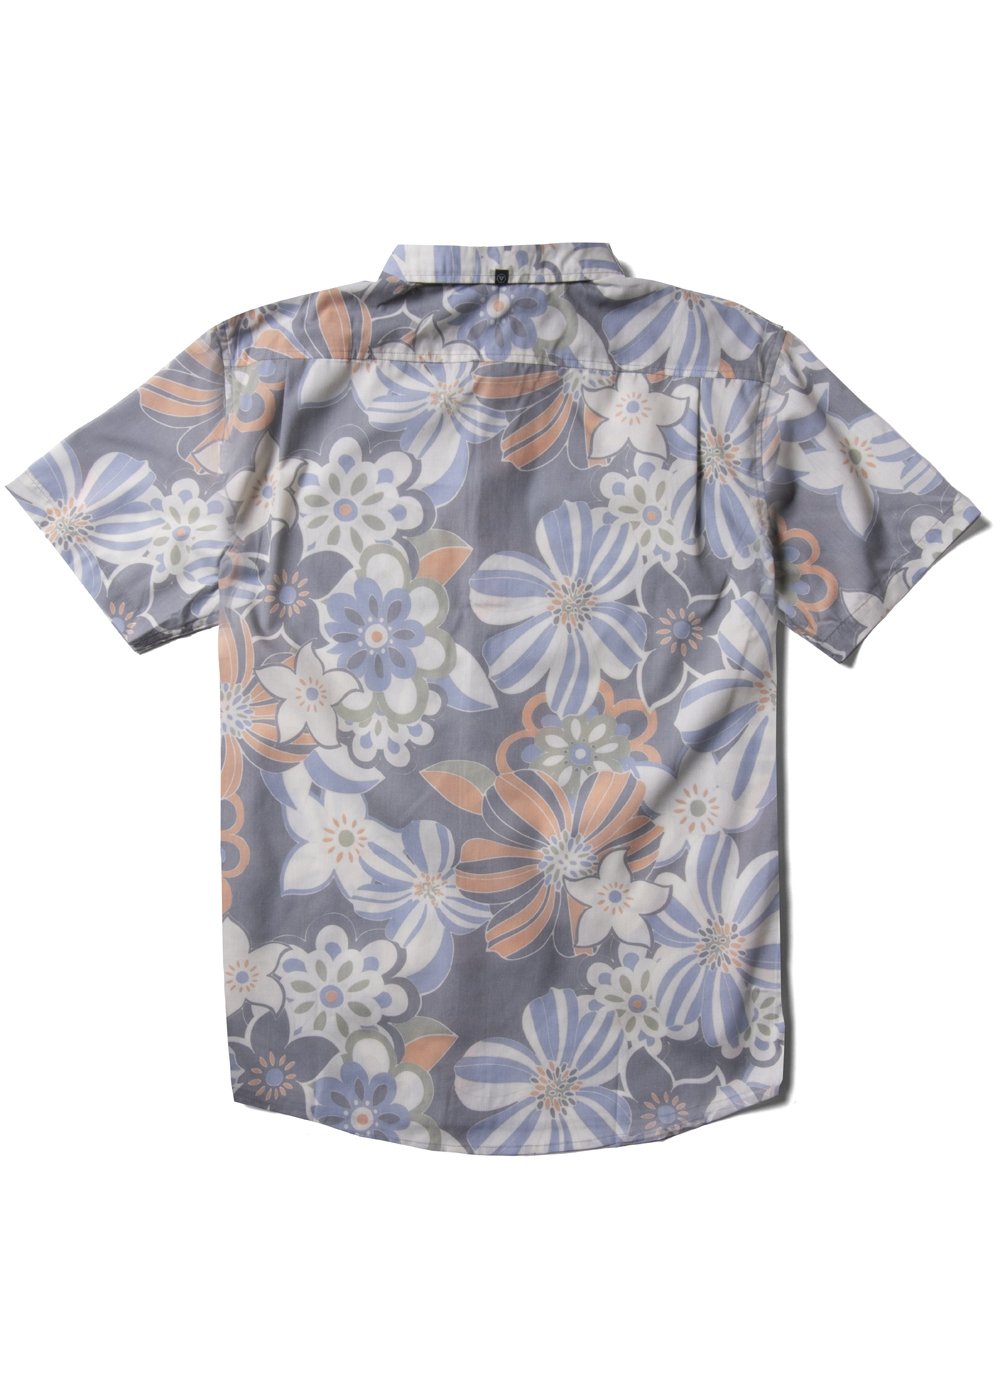 Vissla Kailua Eco Short Sleeve Shirt - Graphite - Sun Diego Boardshop